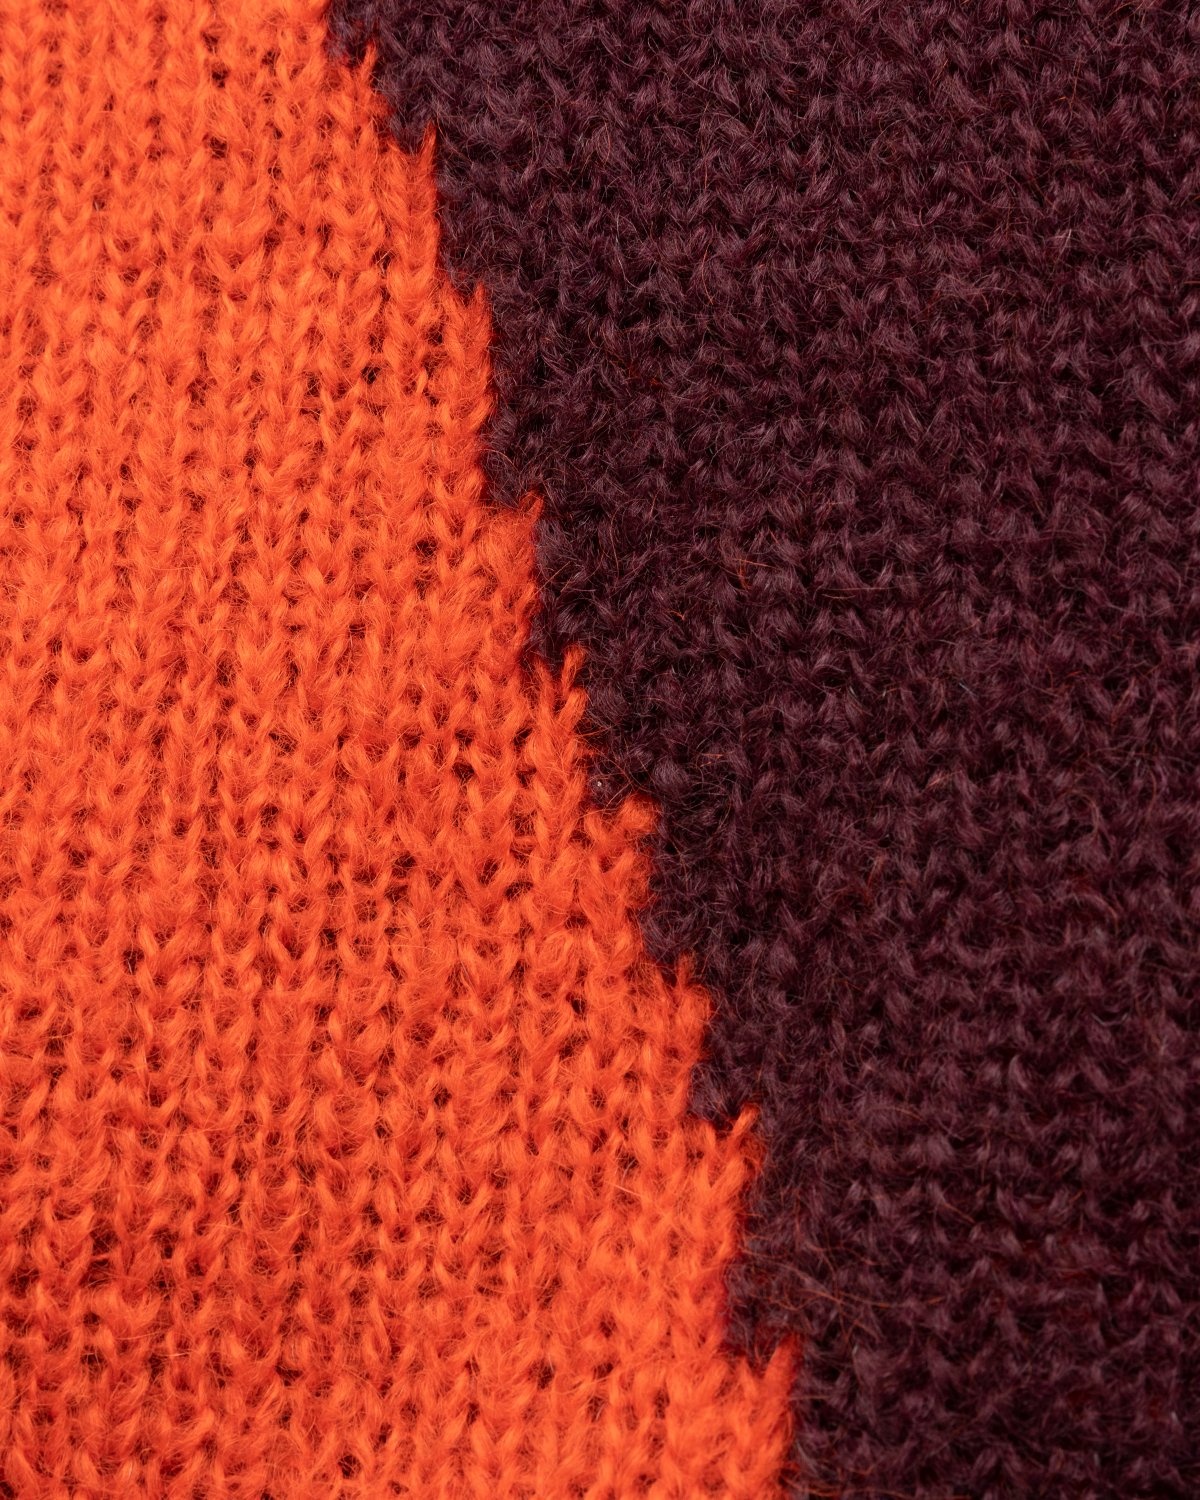 Jil Sander – Sweater Knitted Open Red - Knitwear - Red - Image 6